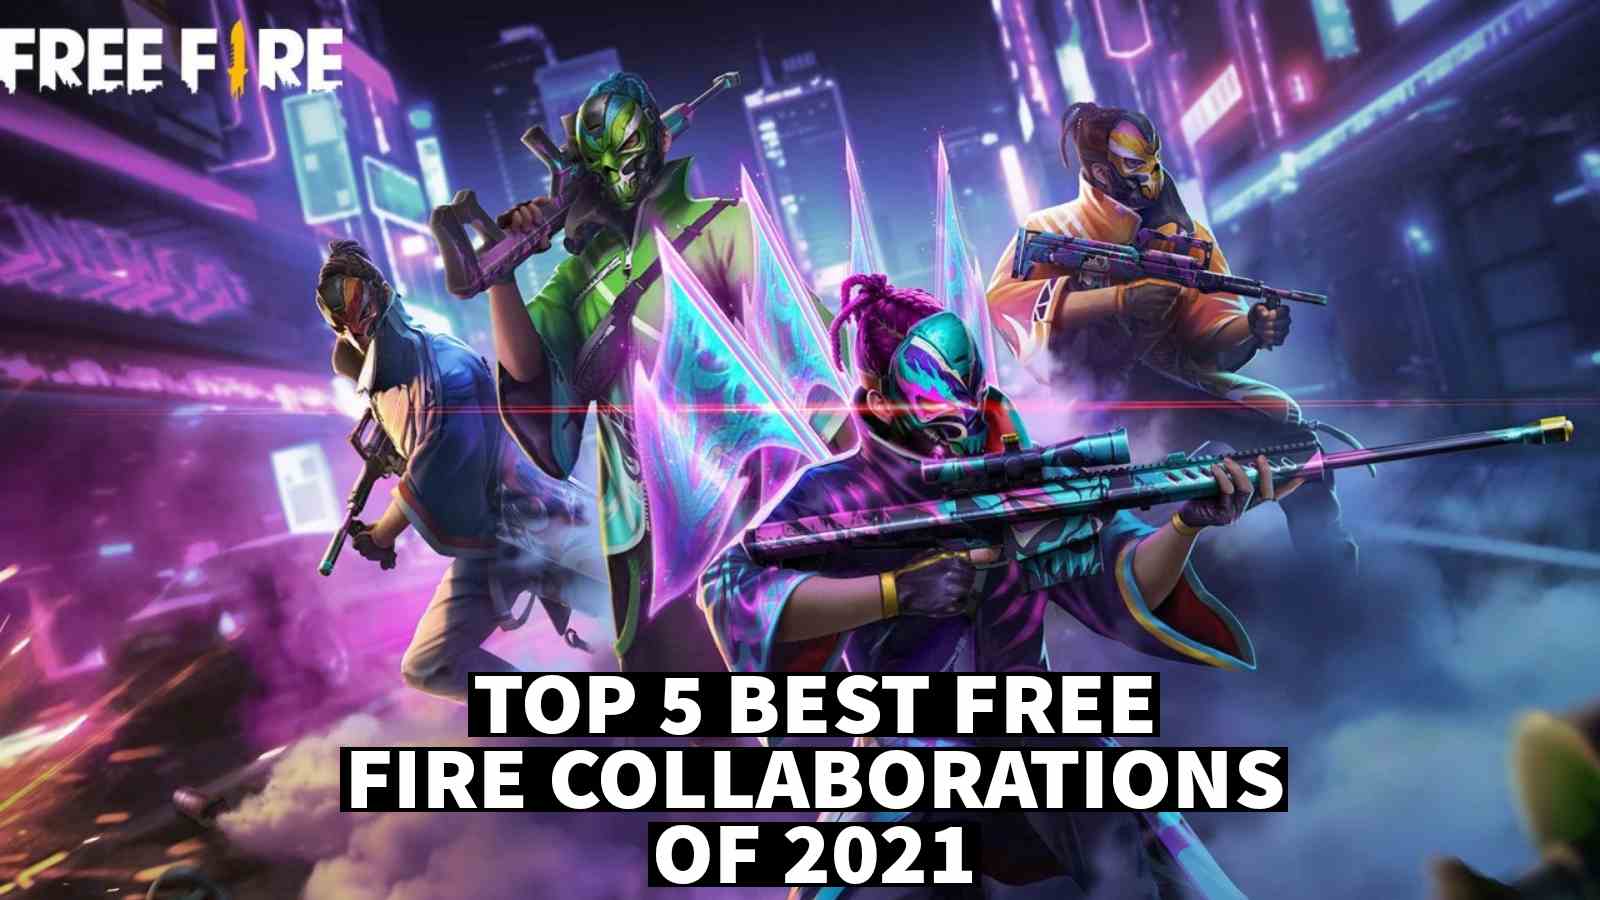 FREE Rewards Free Fire x Infinix Collaboration, Free Fire New Event